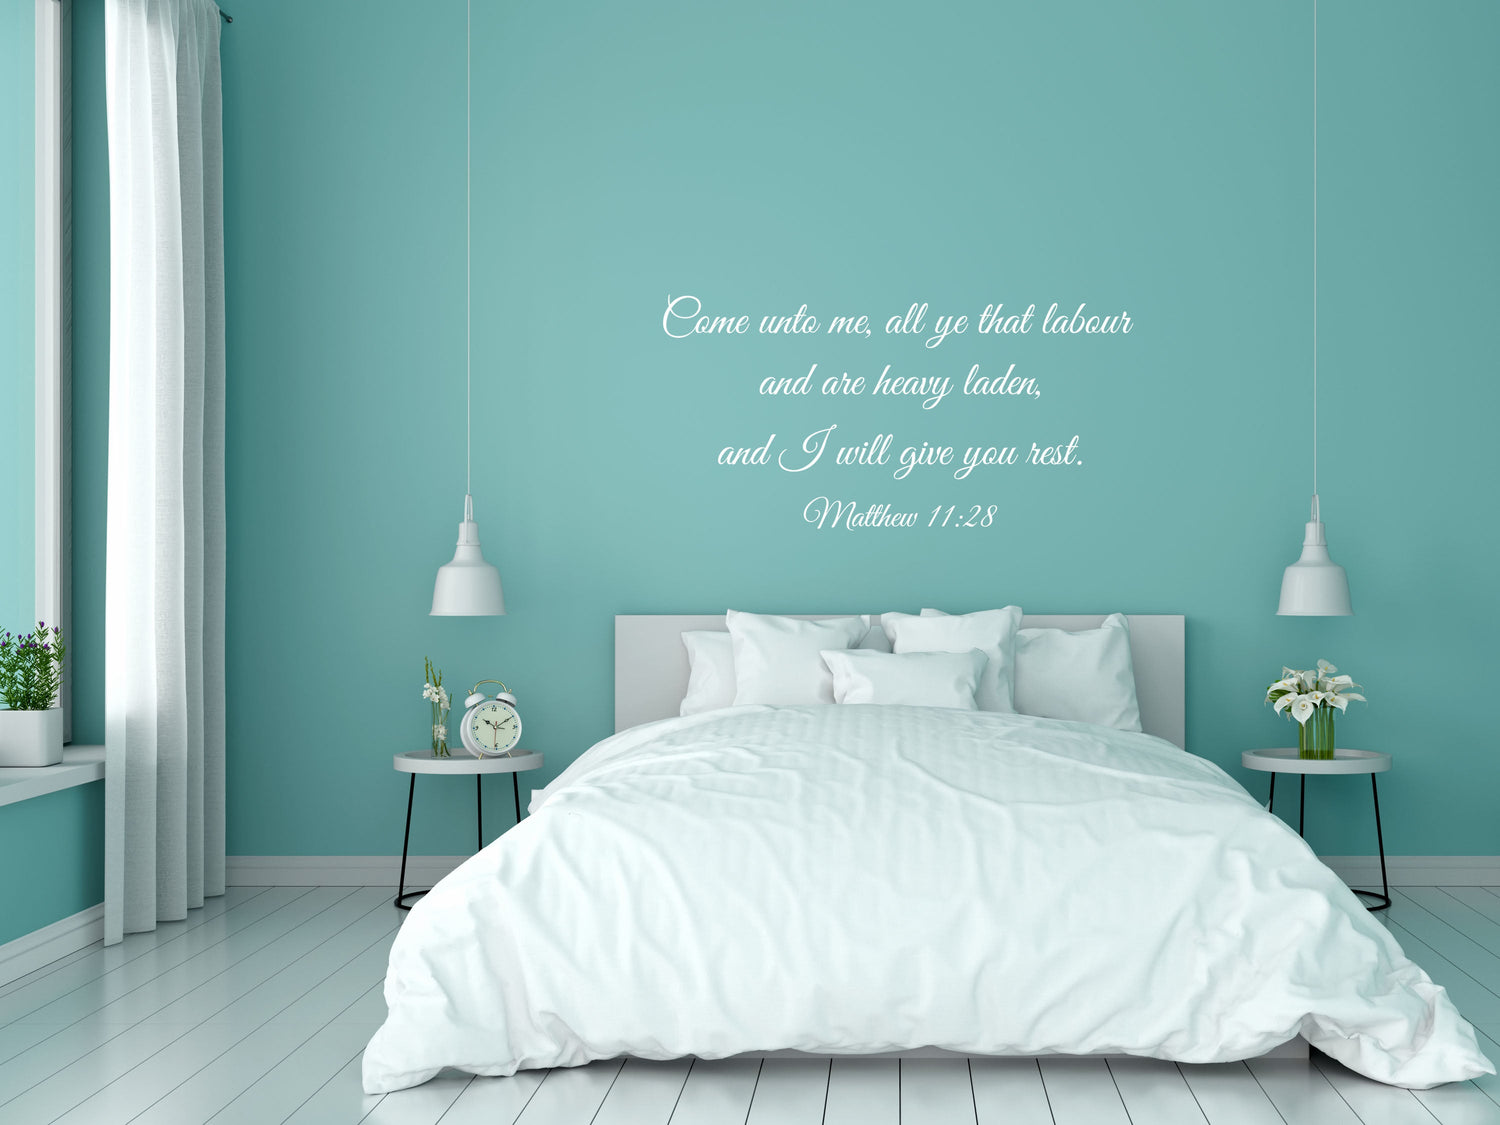 Matthew 11:28 - Bedroom Scripture Decal Vinyl Wall Decal Inspirational Wall Signs 